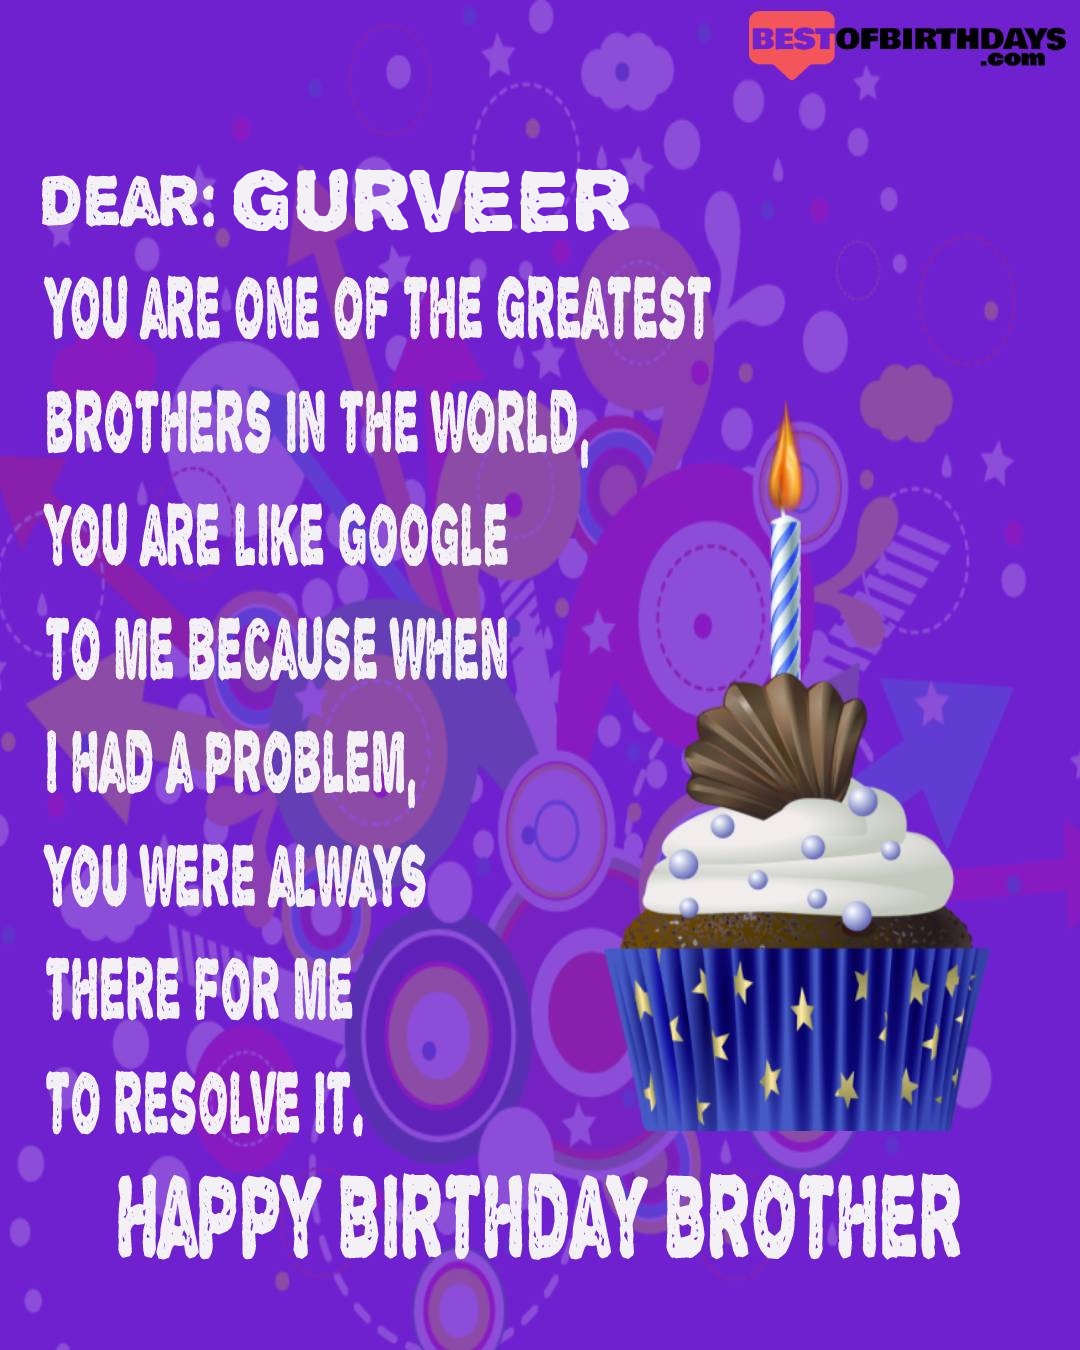 Happy birthday gurveer bhai brother bro